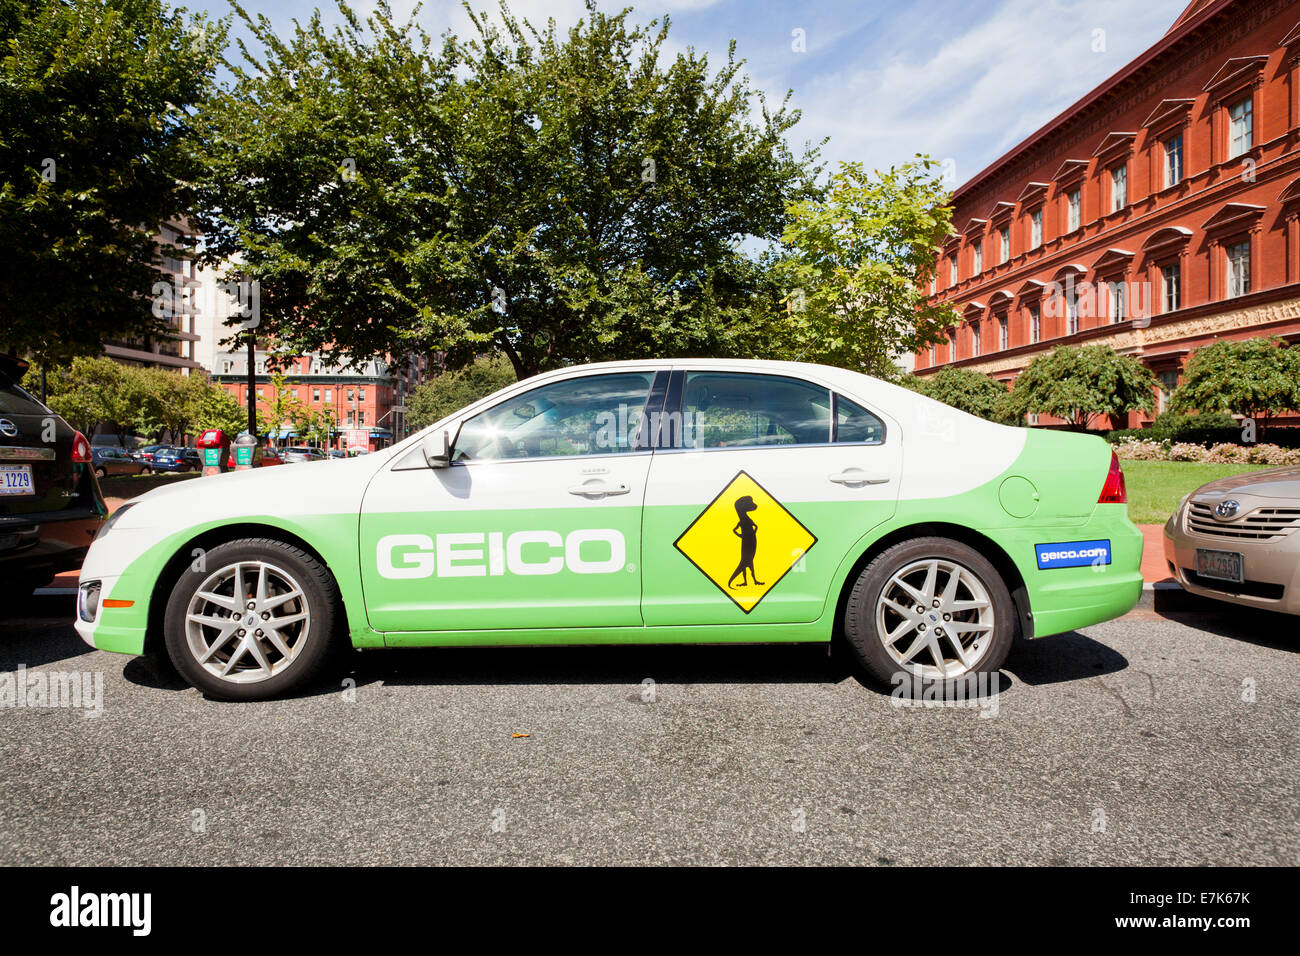 Geico insurance company car - Washington, DC USA Stock Photo